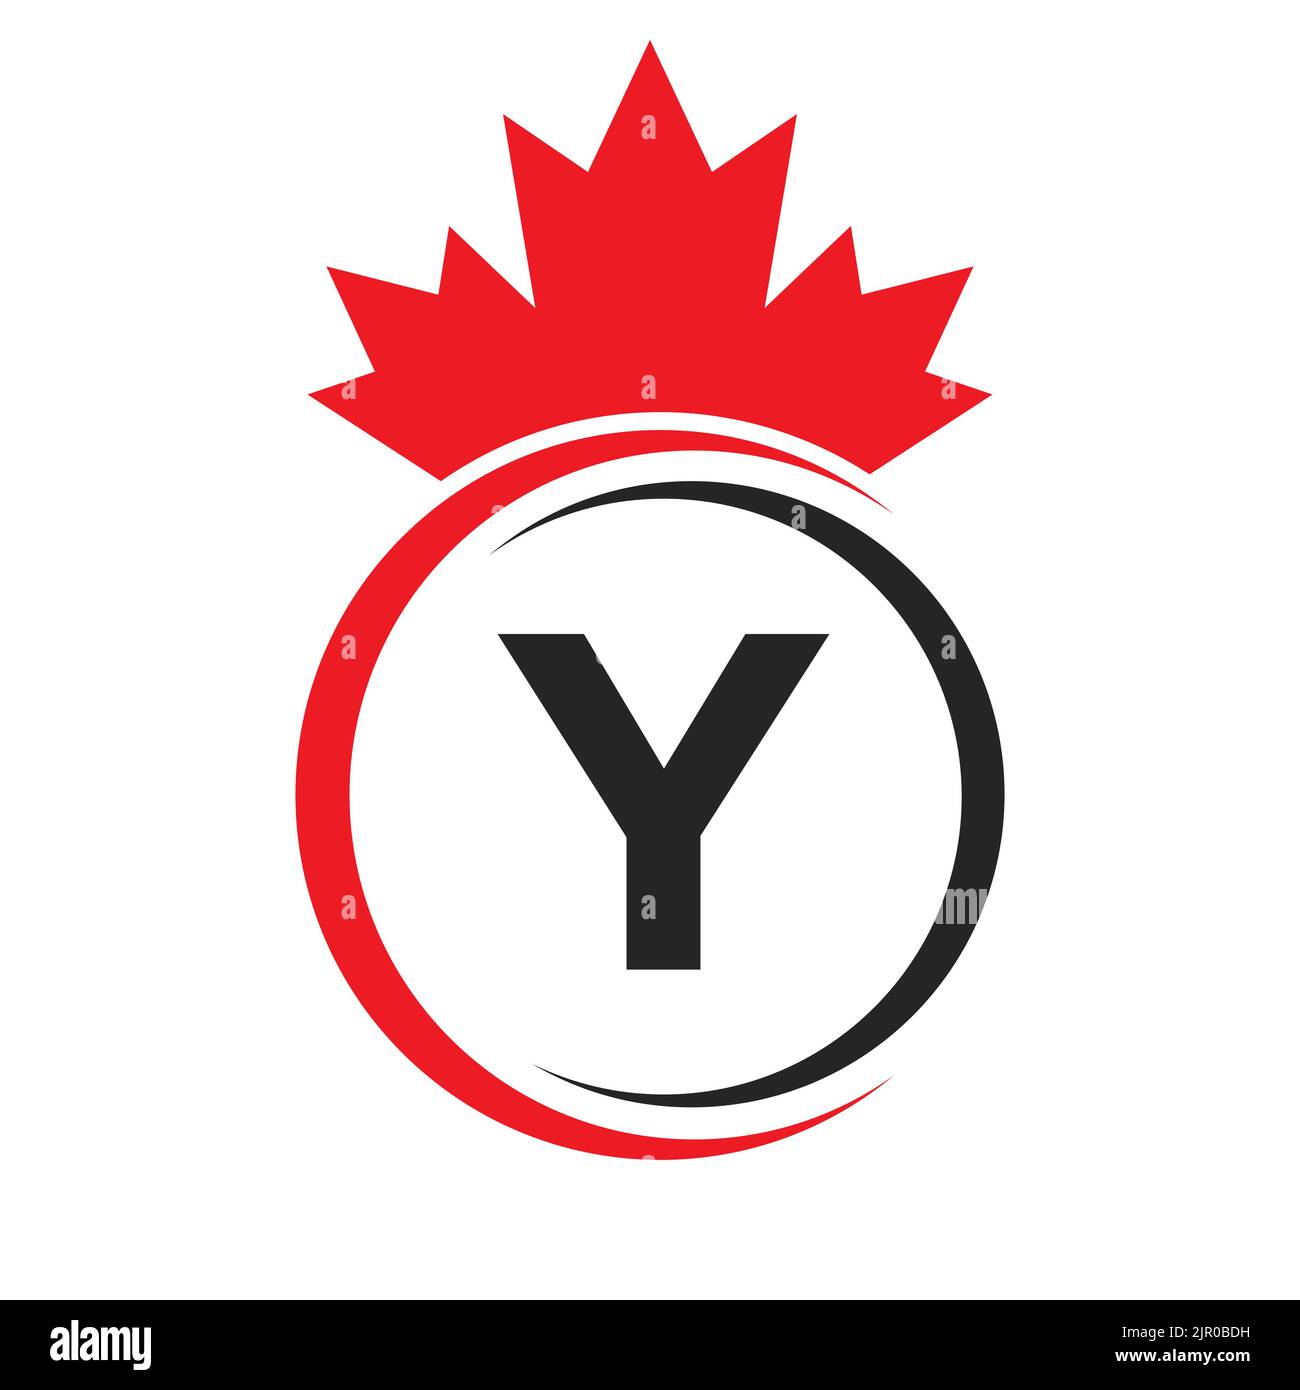 Buchstabe Y Maple Leaf Logo Vorlage Symbol von Kanada. Minimal Canadian Business, Company Logo Concept mit Y Alphabet Vector Stock Vektor